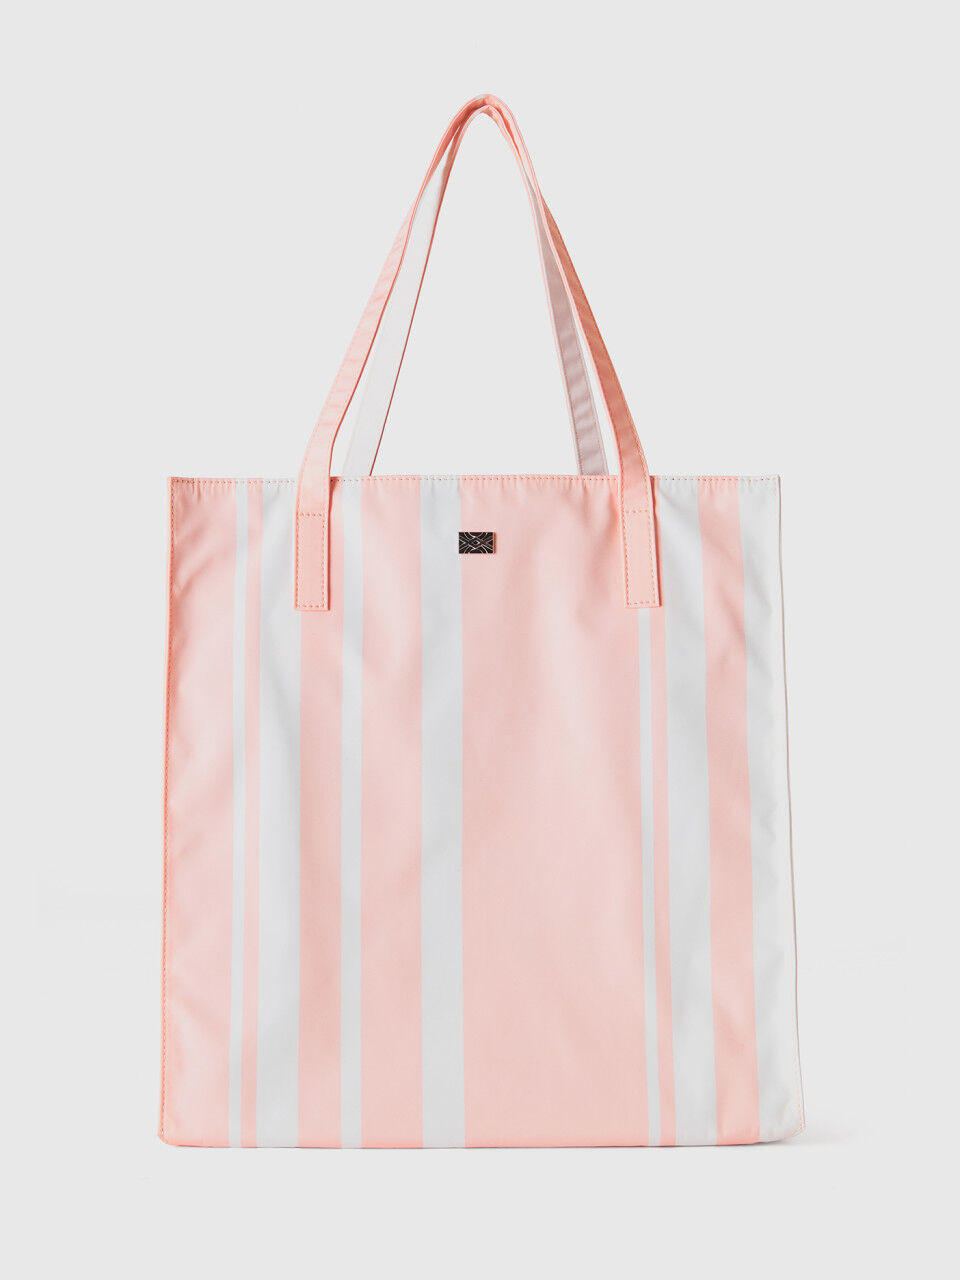 Shopping Bag in Rosa gestreift